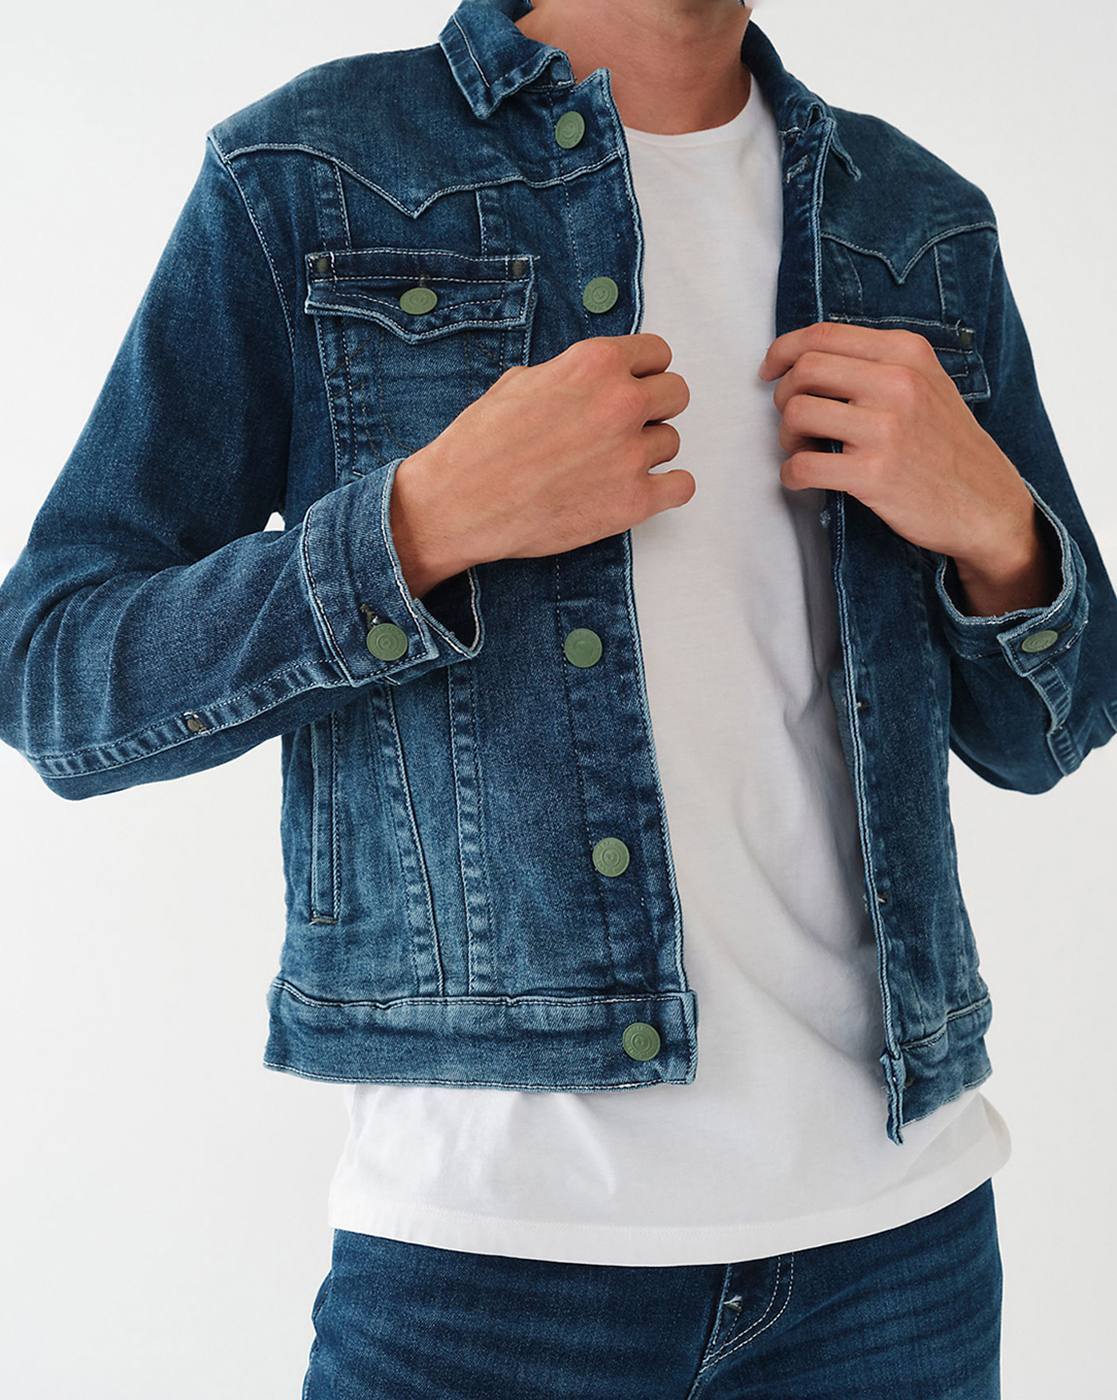 Buy World2home Men's Jean Jacket Men Denim Jackets for Men Slim Fit Stand  Collar 100% Cotton Outerwear Fashion Jean Jacket Coat Male Light Blue at  Amazon.in